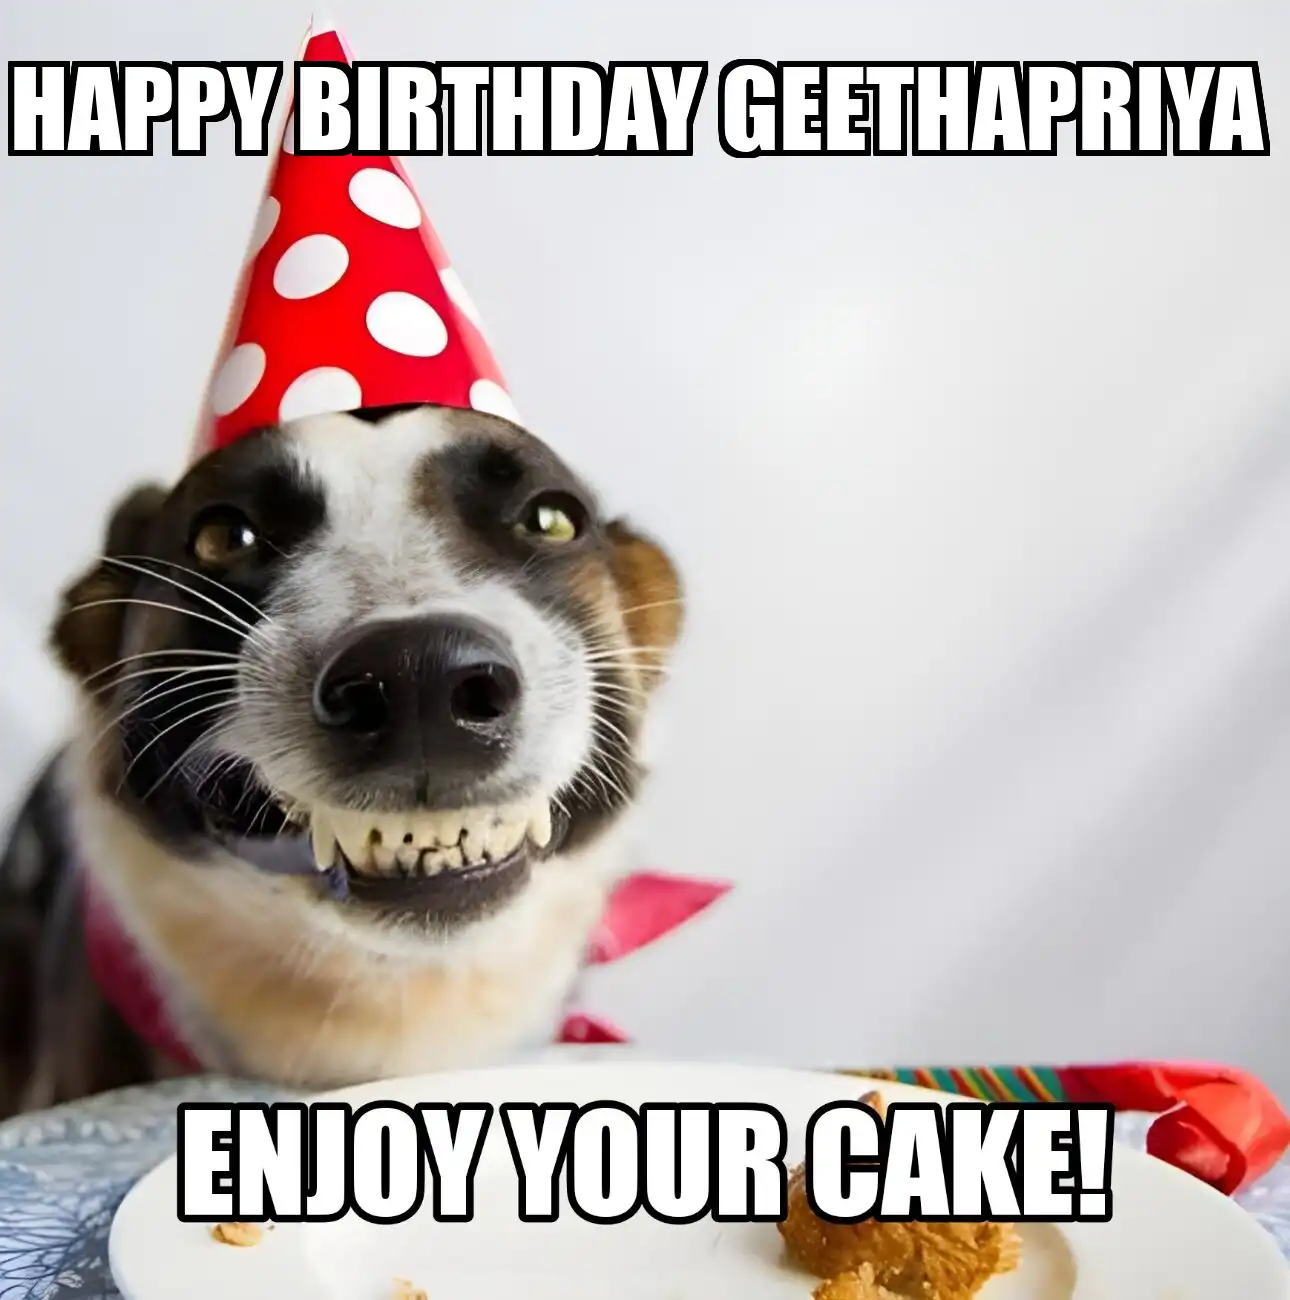 Happy Birthday Geethapriya Enjoy Your Cake Dog Meme